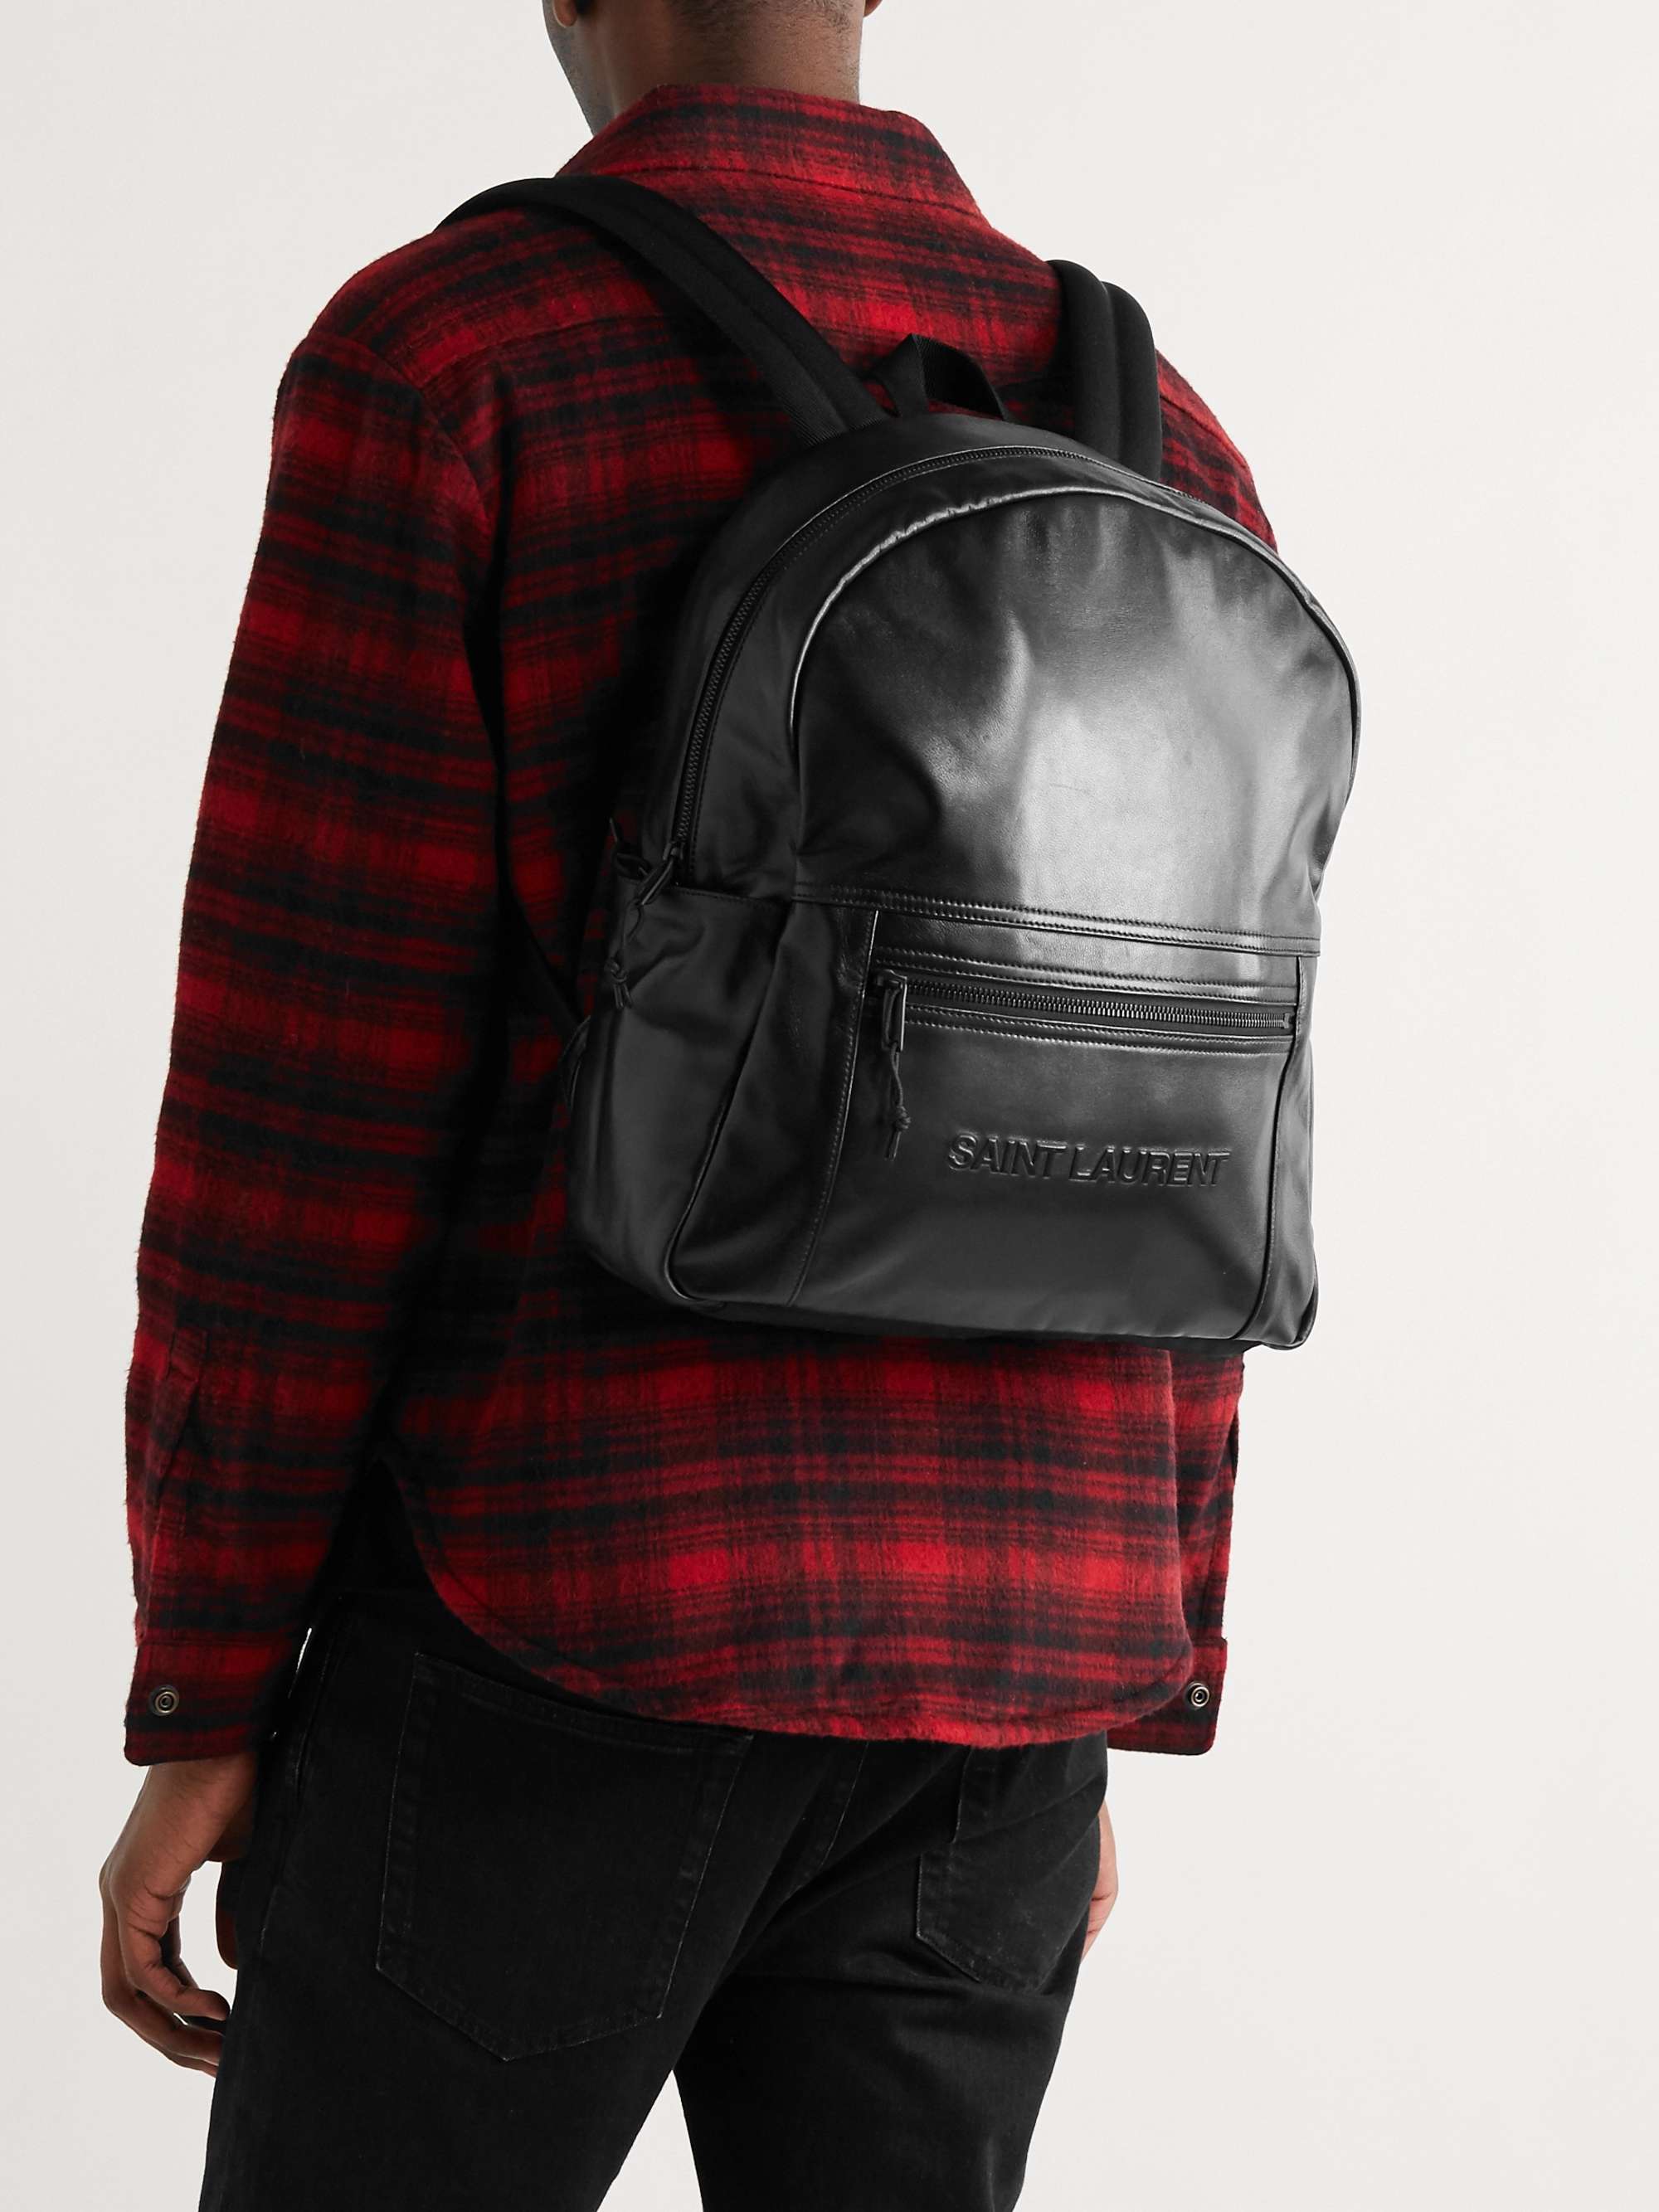 SAINT LAURENT Logo-Embossed Leather Backpack